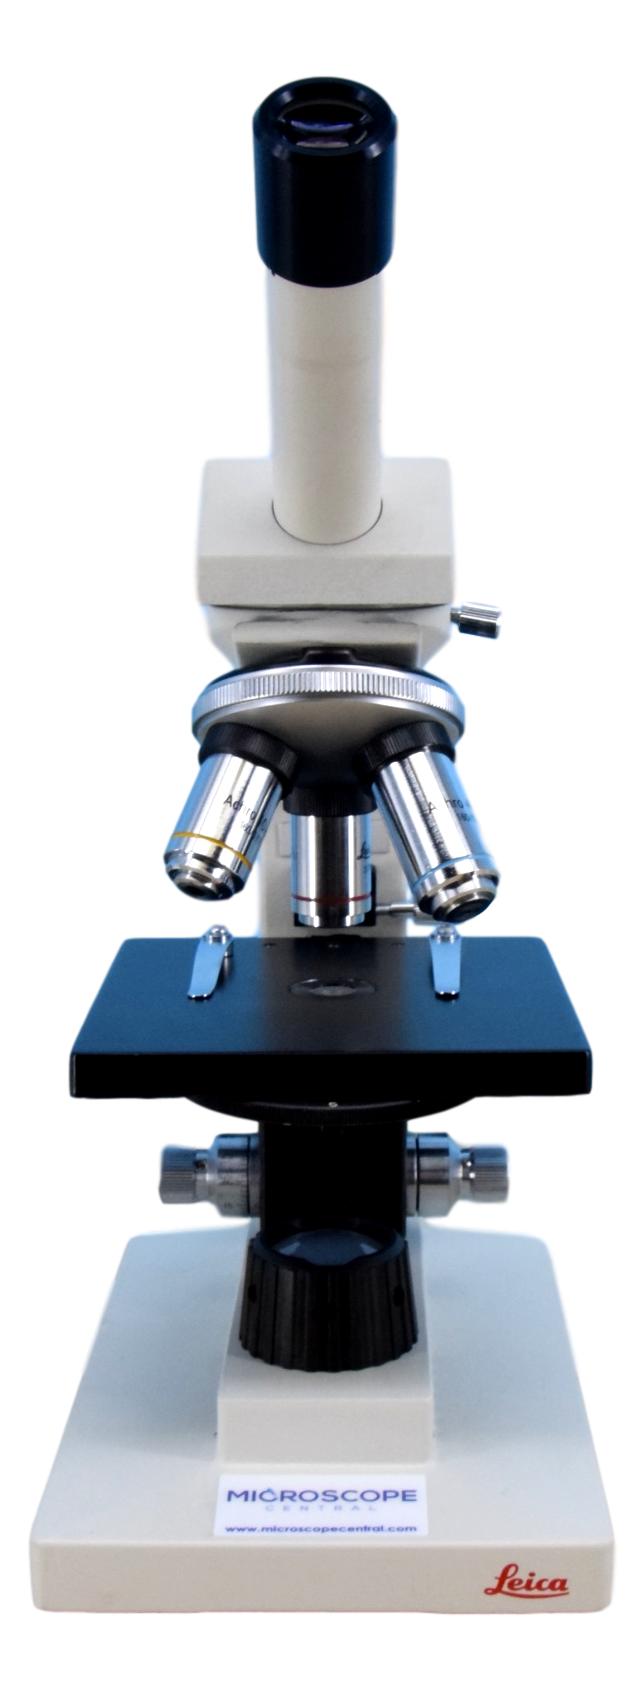 Leica StrataLab Microscope